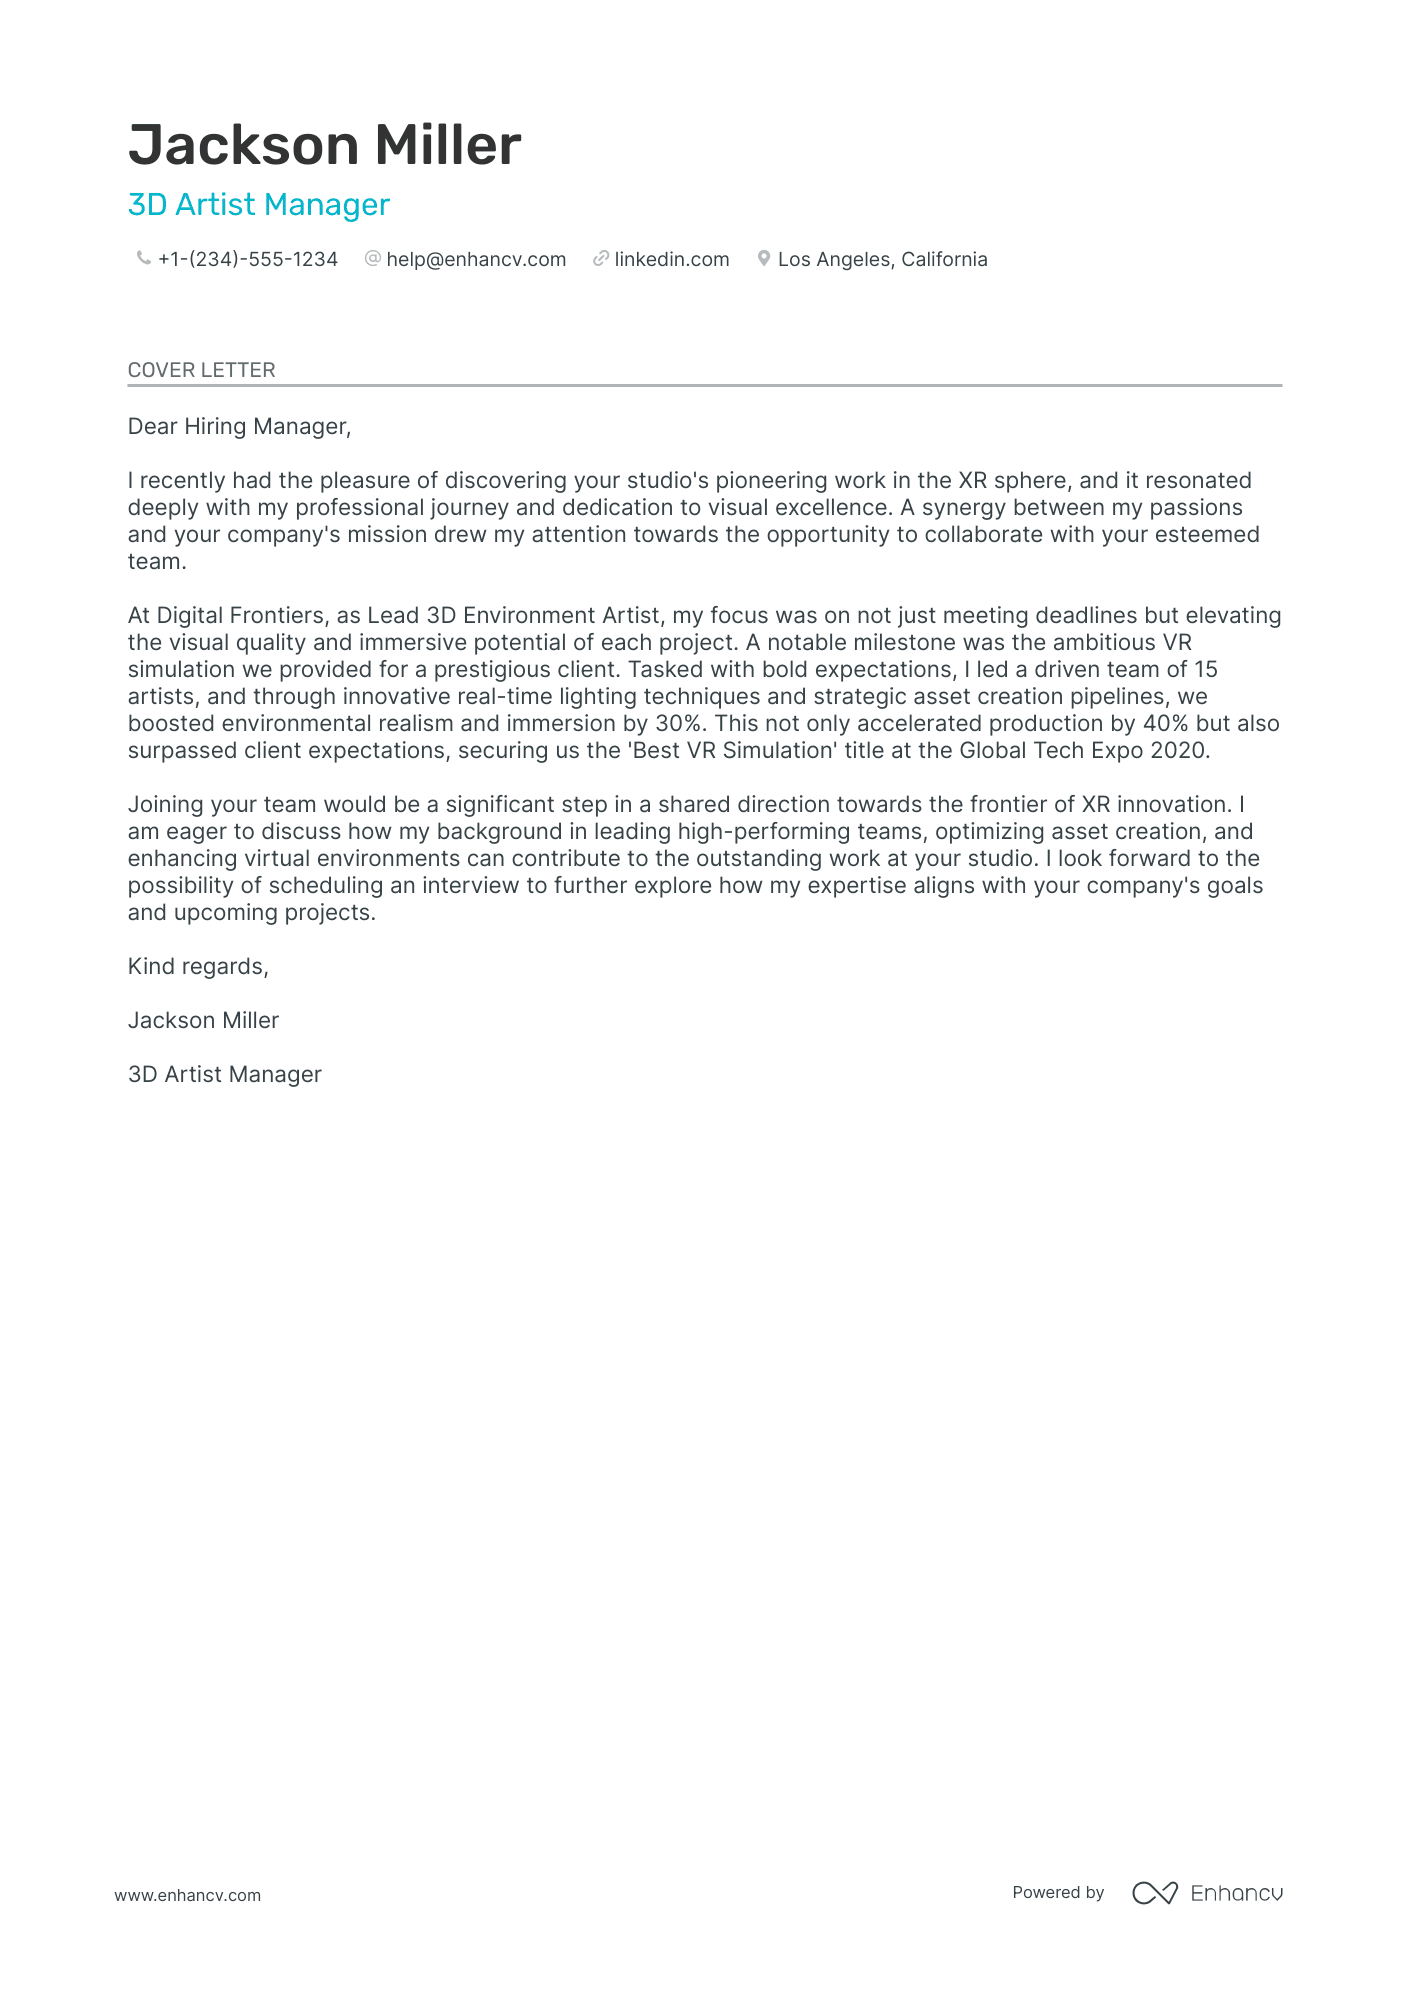 Artist Manager cover letter